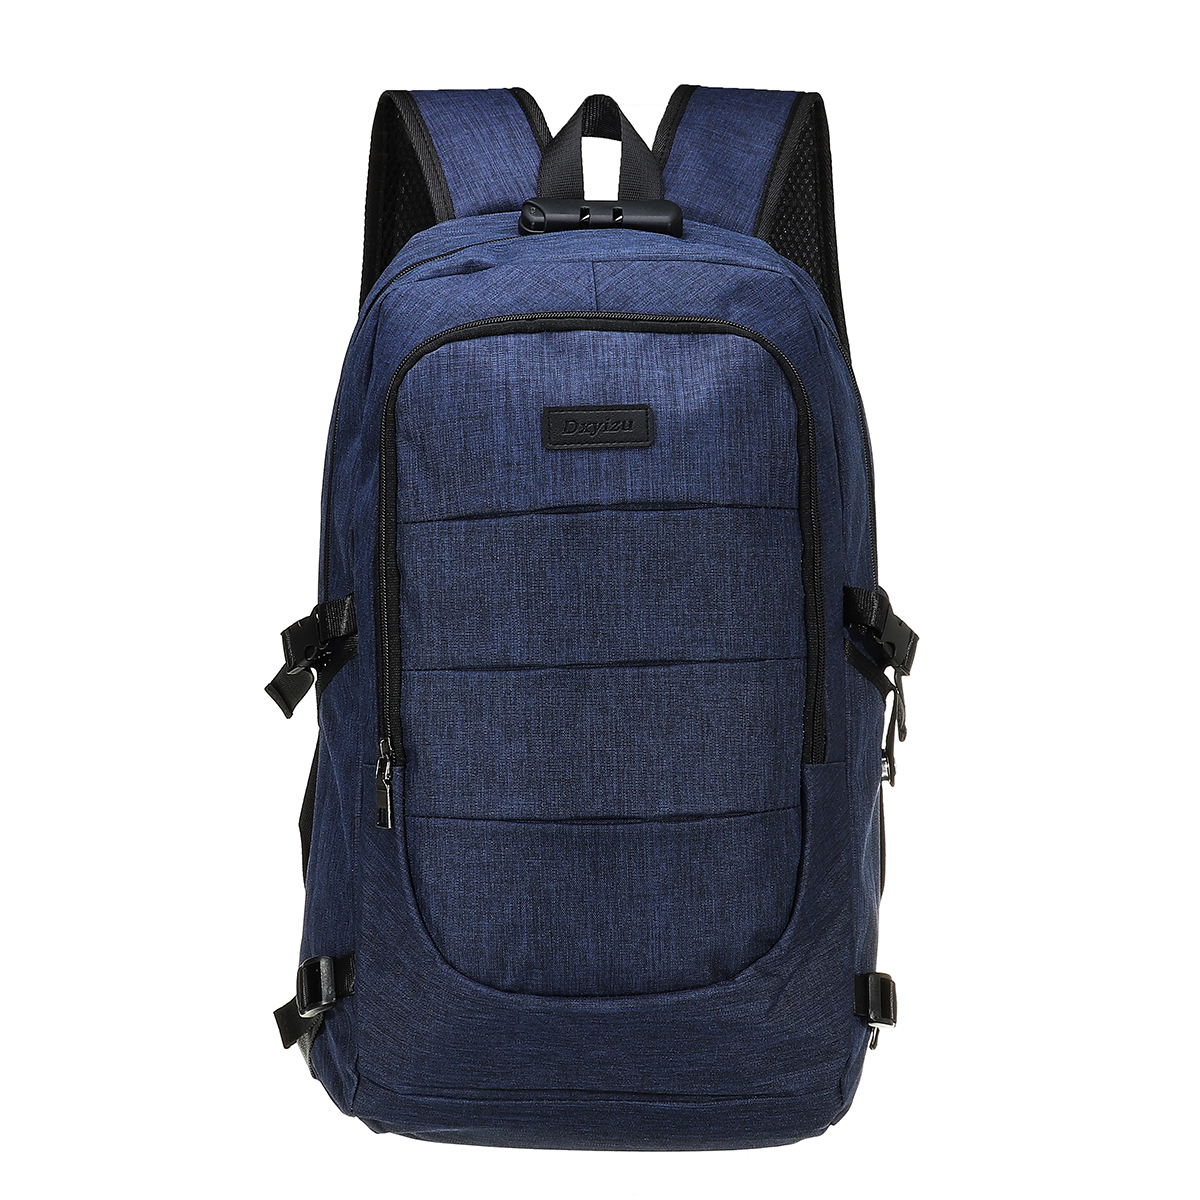 Unisex-Anti-Theft-Laptop-Backpack-Travel-Business-School-Bag-Rucksack-With-Safe-Lock--USB-Port-1651517-7